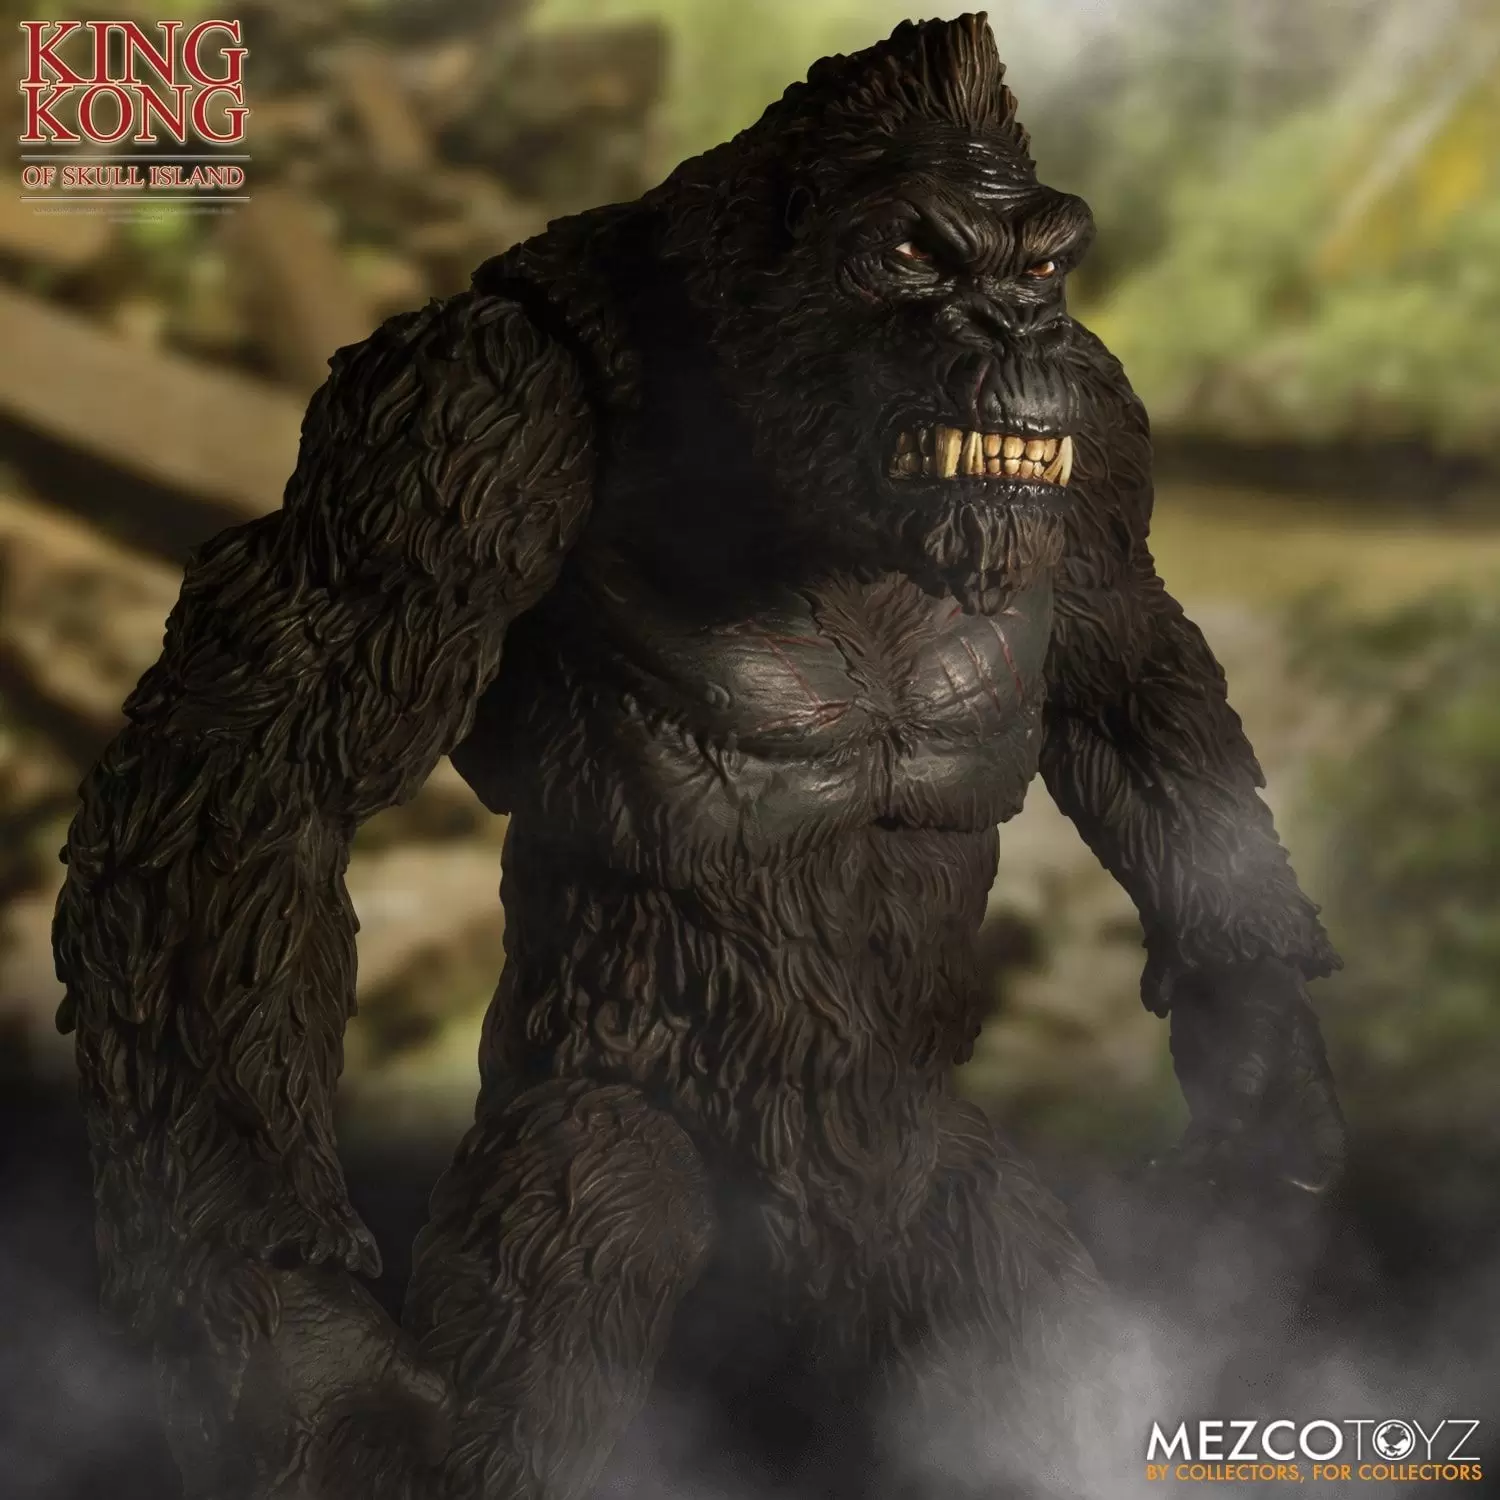 MezcoToyz - King Kong - Ultimate King Kong of Skull Island